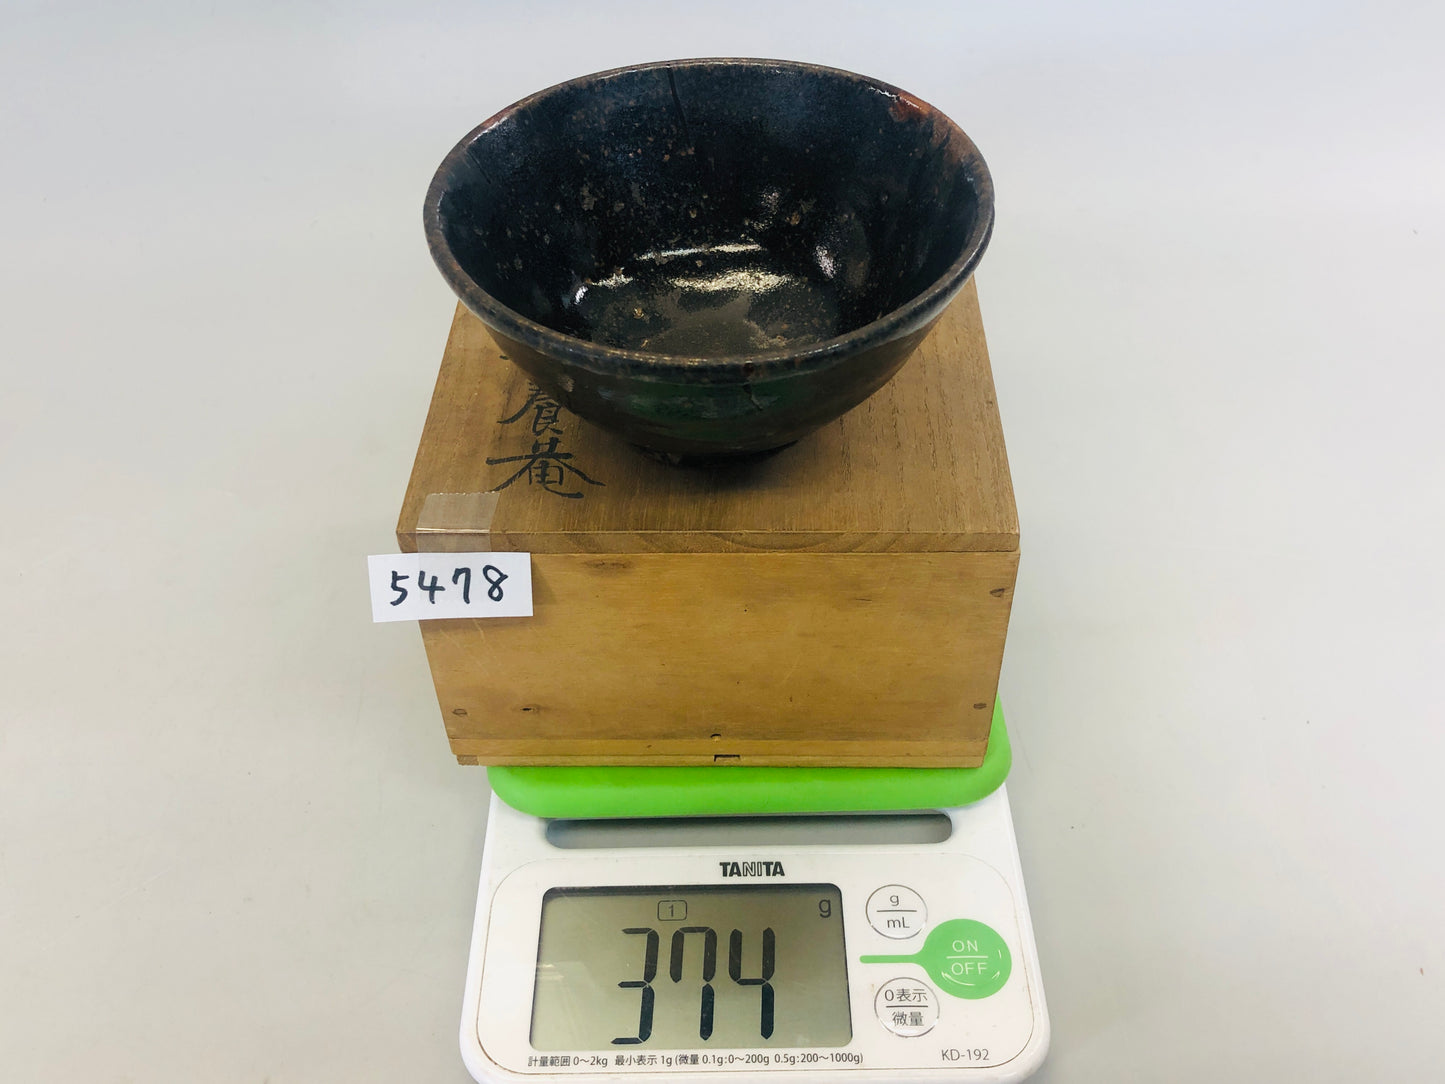 Y5478 CHAWAN Tenmoku black kintsugi flat small Japan antique tea ceremony bowl